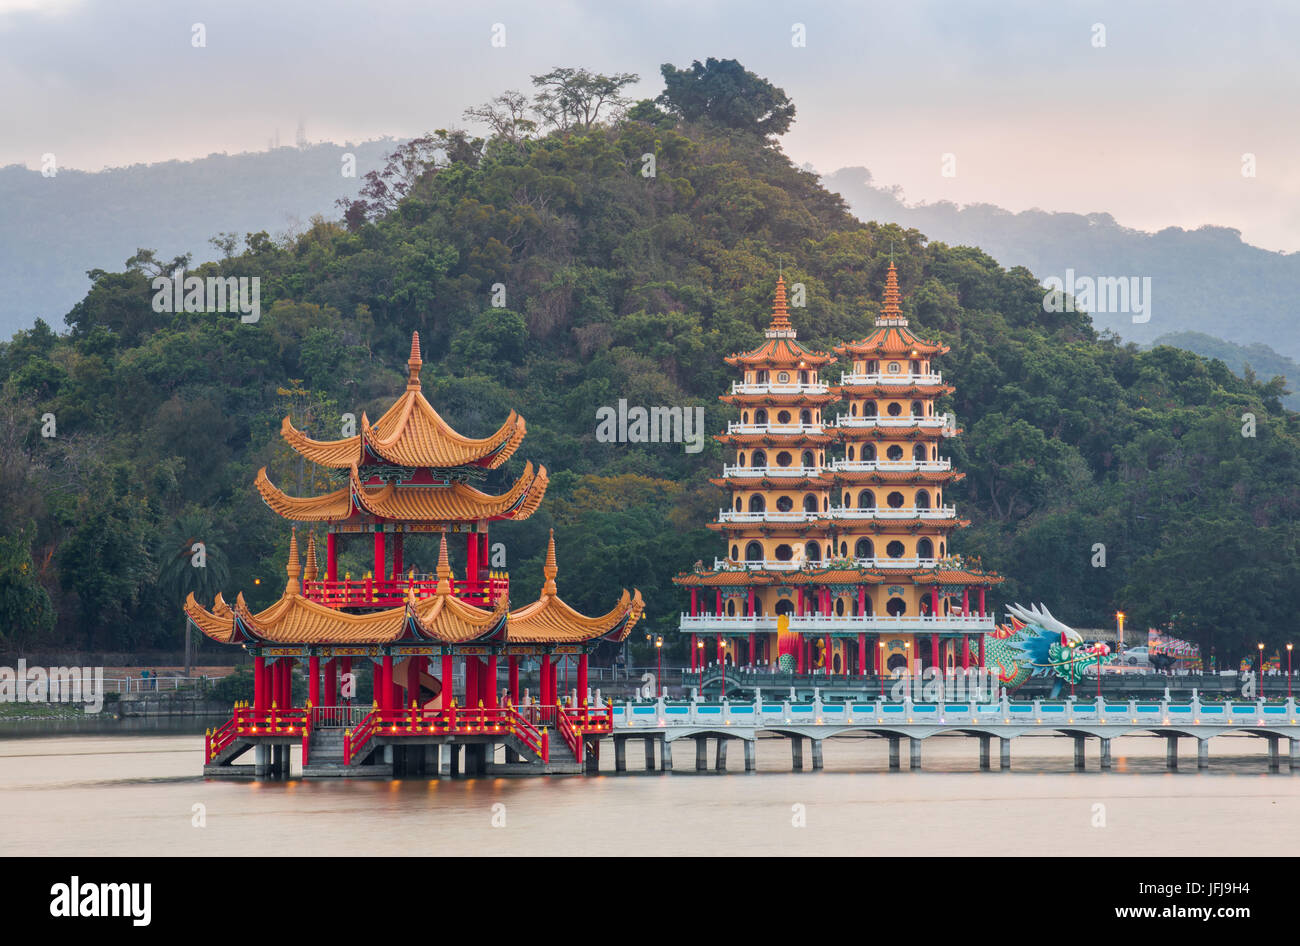 Taiwan, Kaohsiung City, Tsoying District, Lotus Pond, Dragon-and Tiger Pagodas Stock Photo